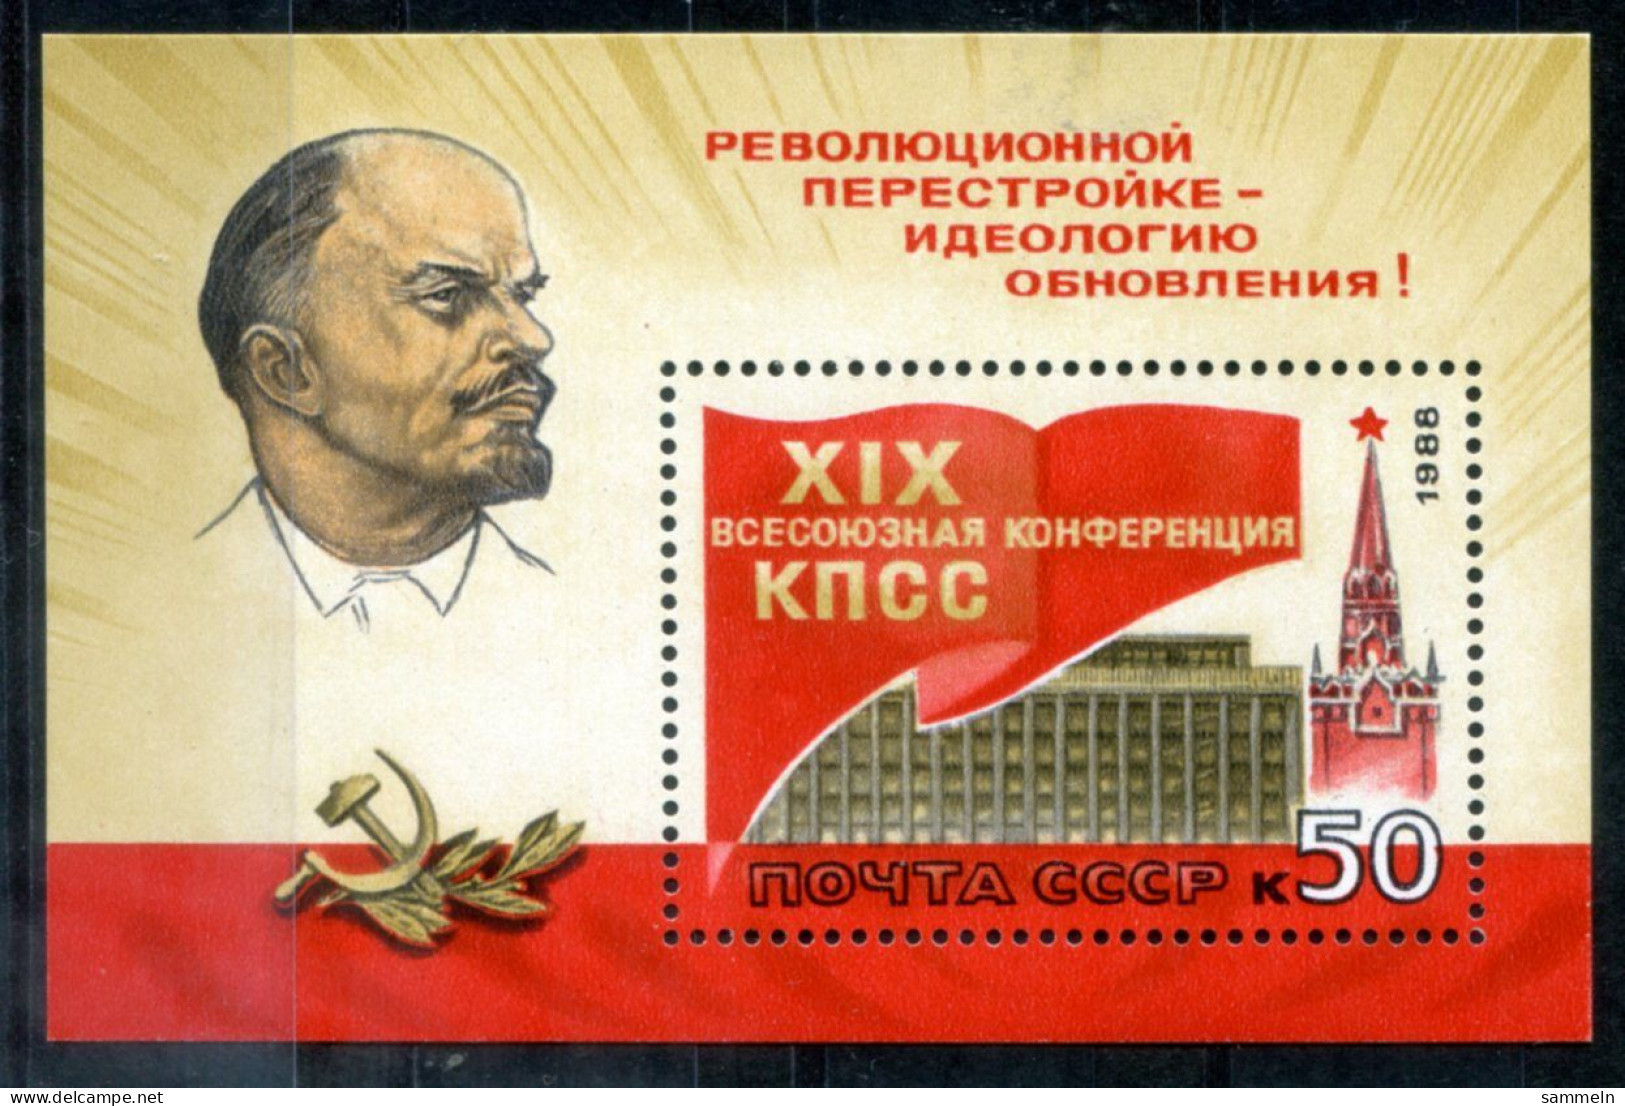 UdSSR Block 201, Bl.201 Mnh - Lenin, Spasskij-Turm, Tower, Tour - USSR / URSS - Blocks & Sheetlets & Panes